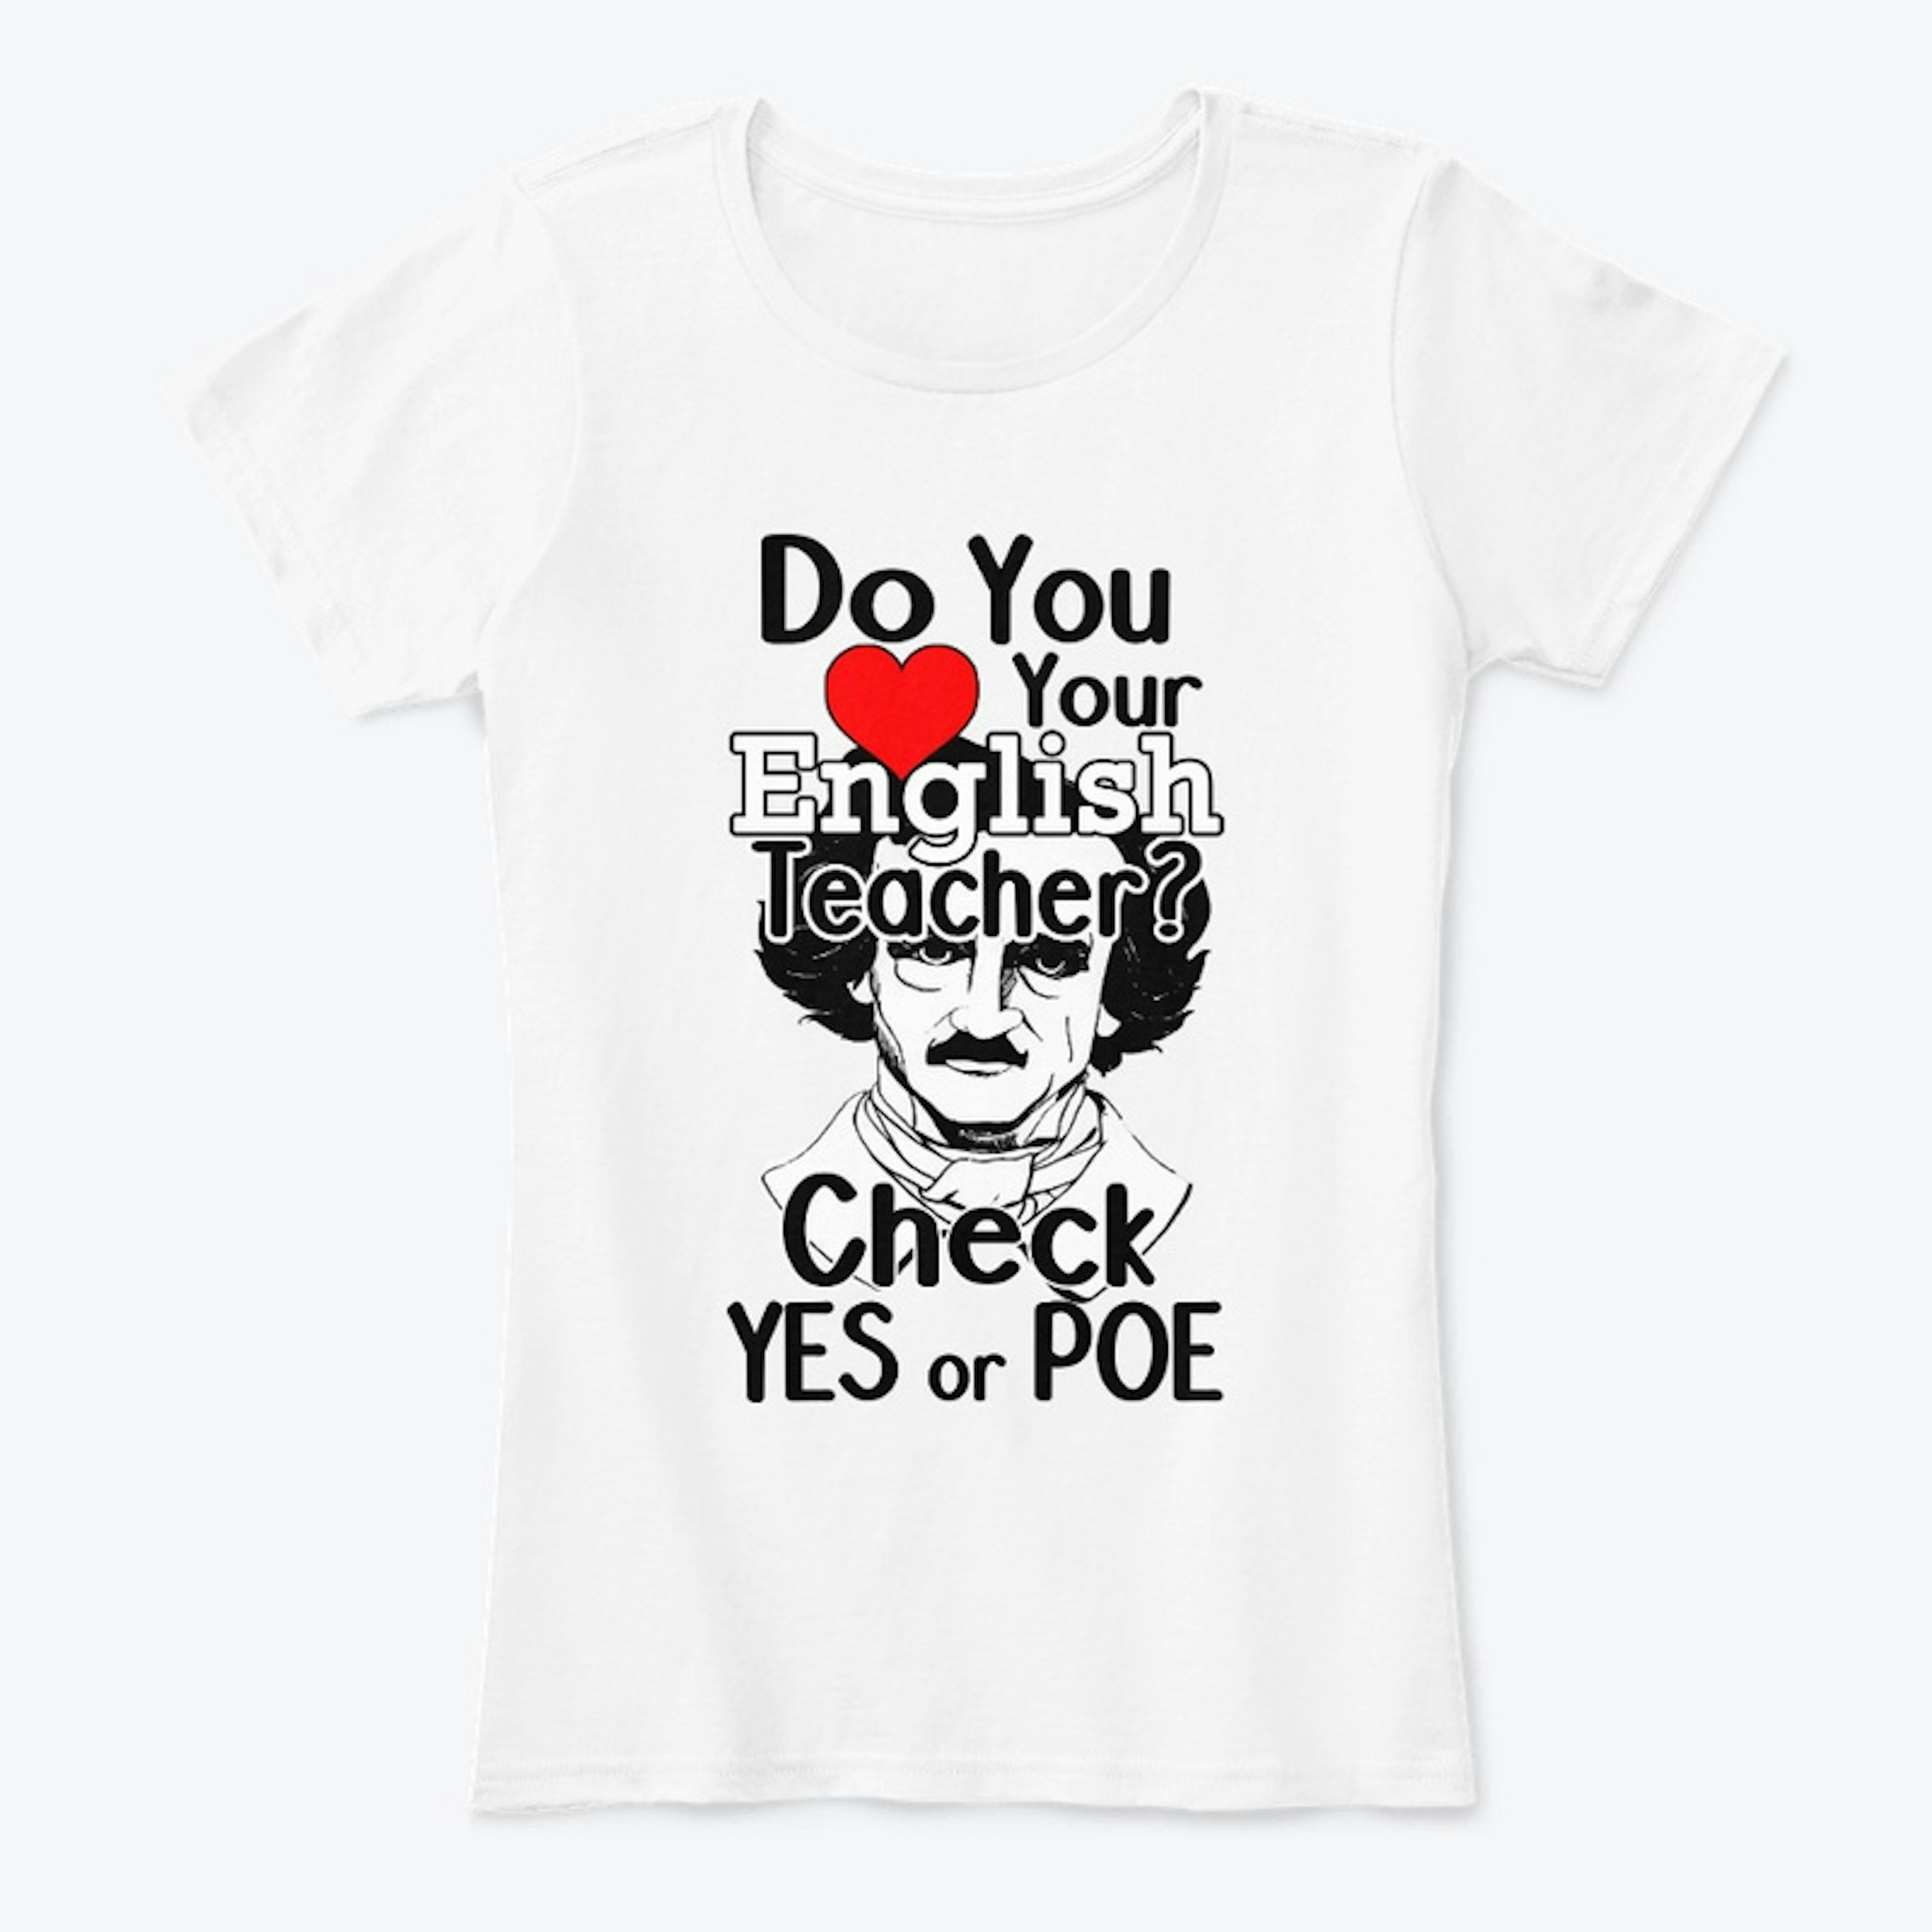 Do Your Love Your English Teacher? Poe 